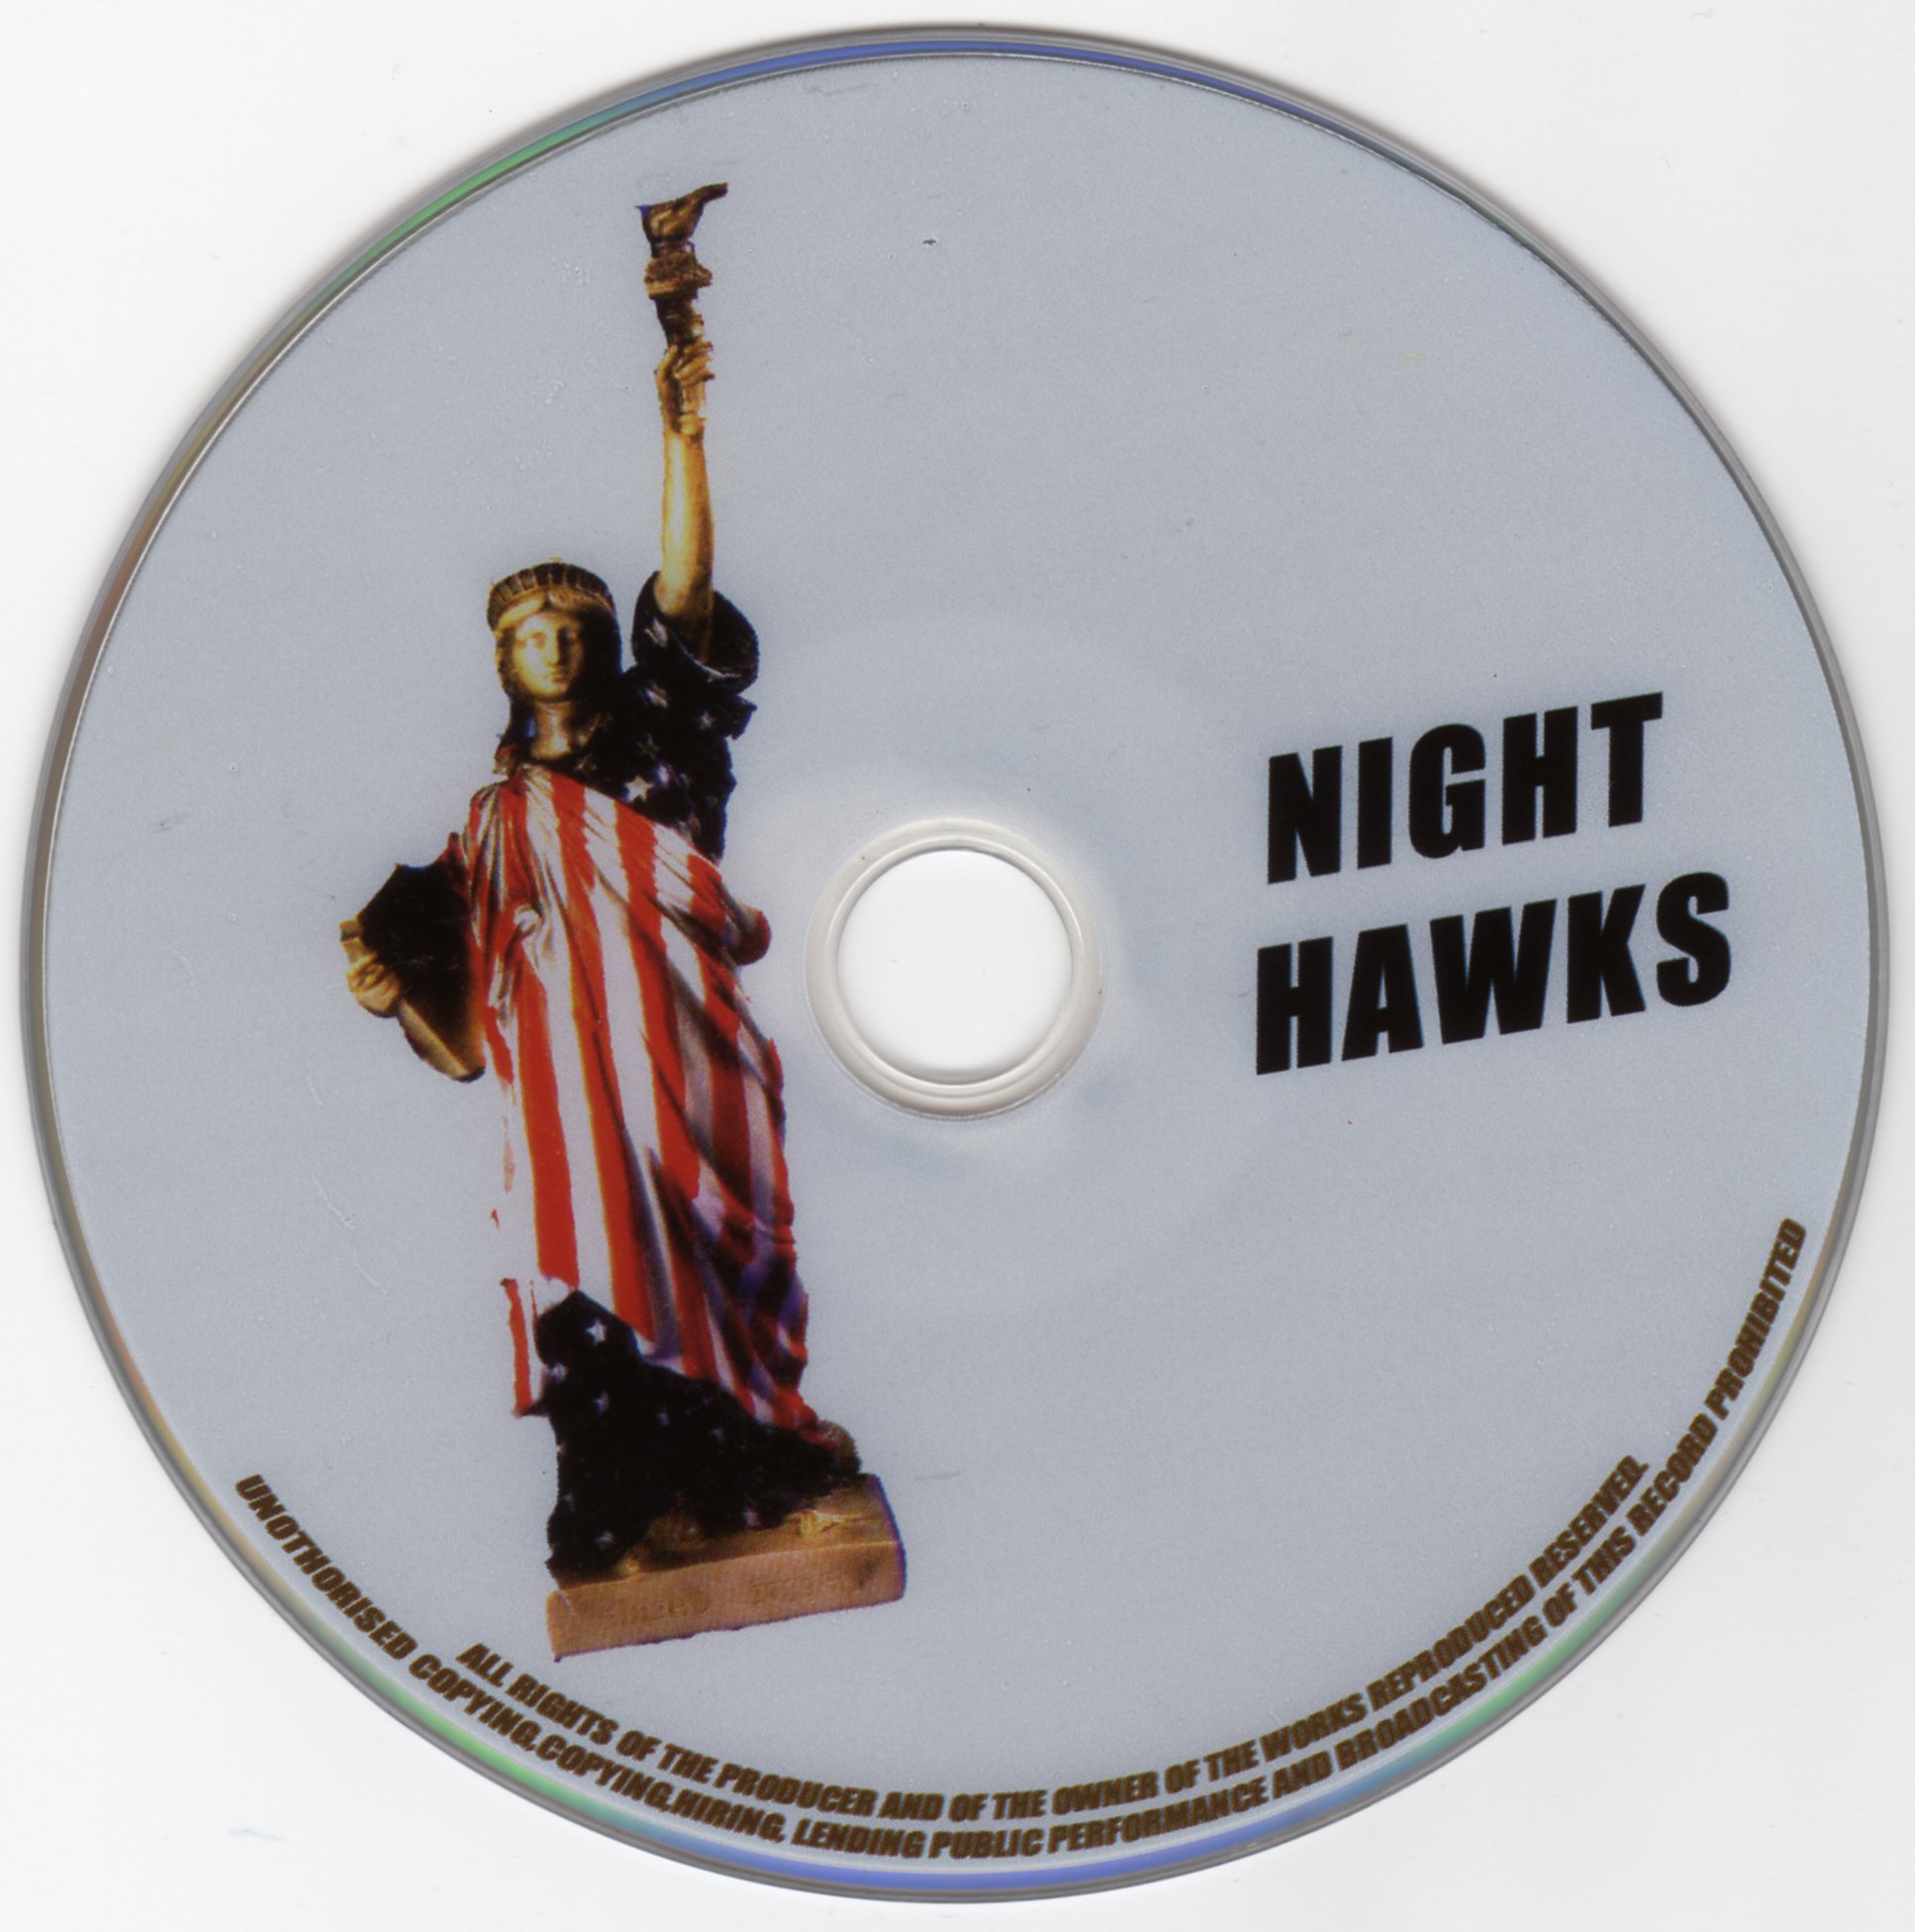 Night hawks